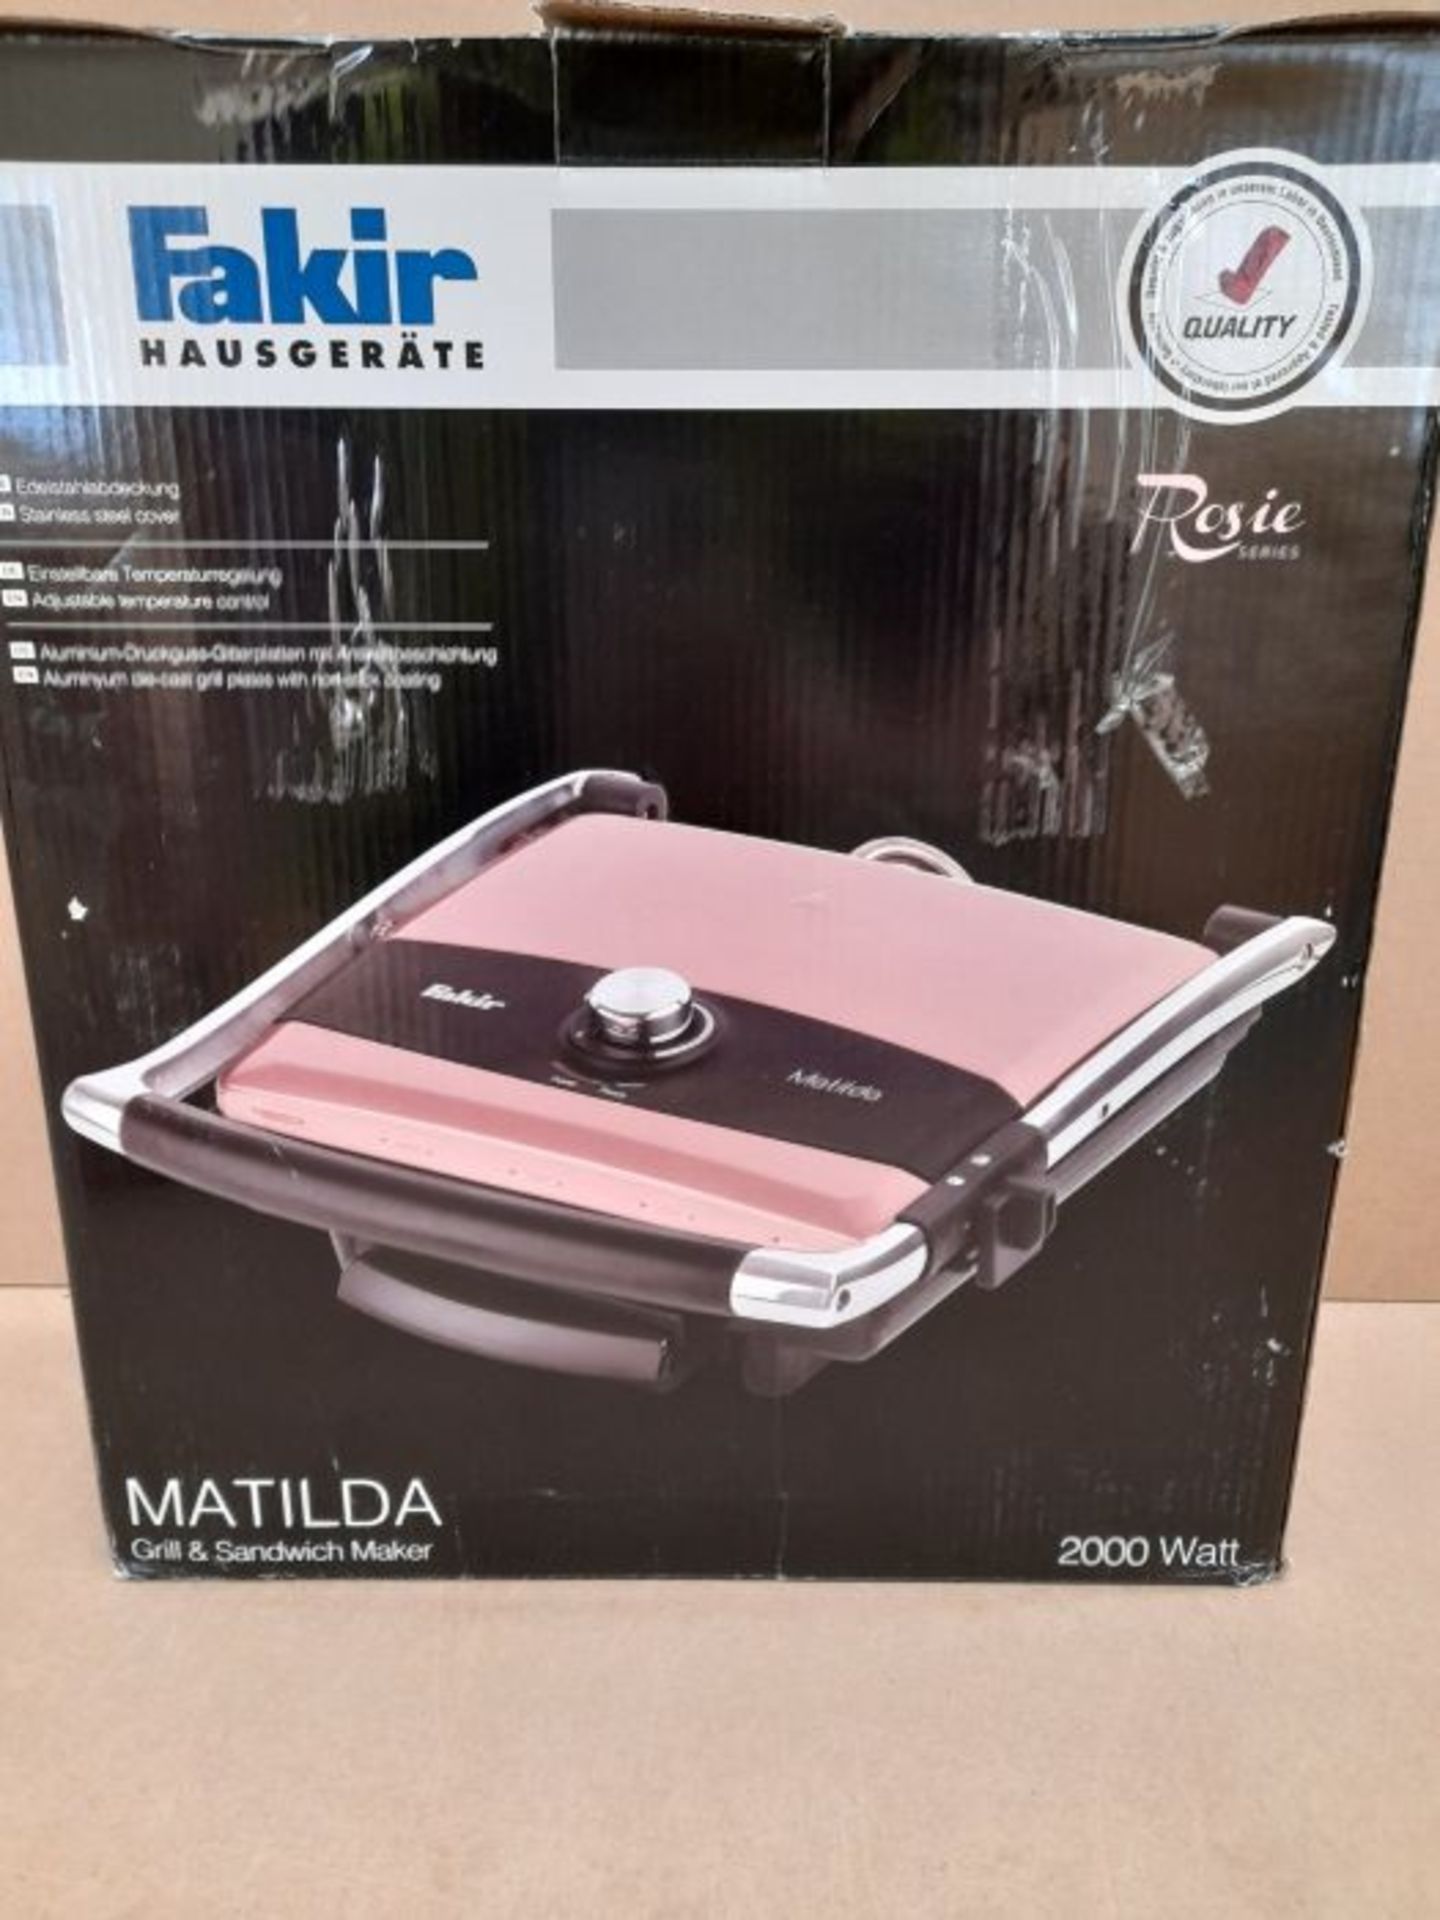 [CRACKED] Fakir Matilda/sandwich maker, contact grill, cast aluminum, multi-grill, sta